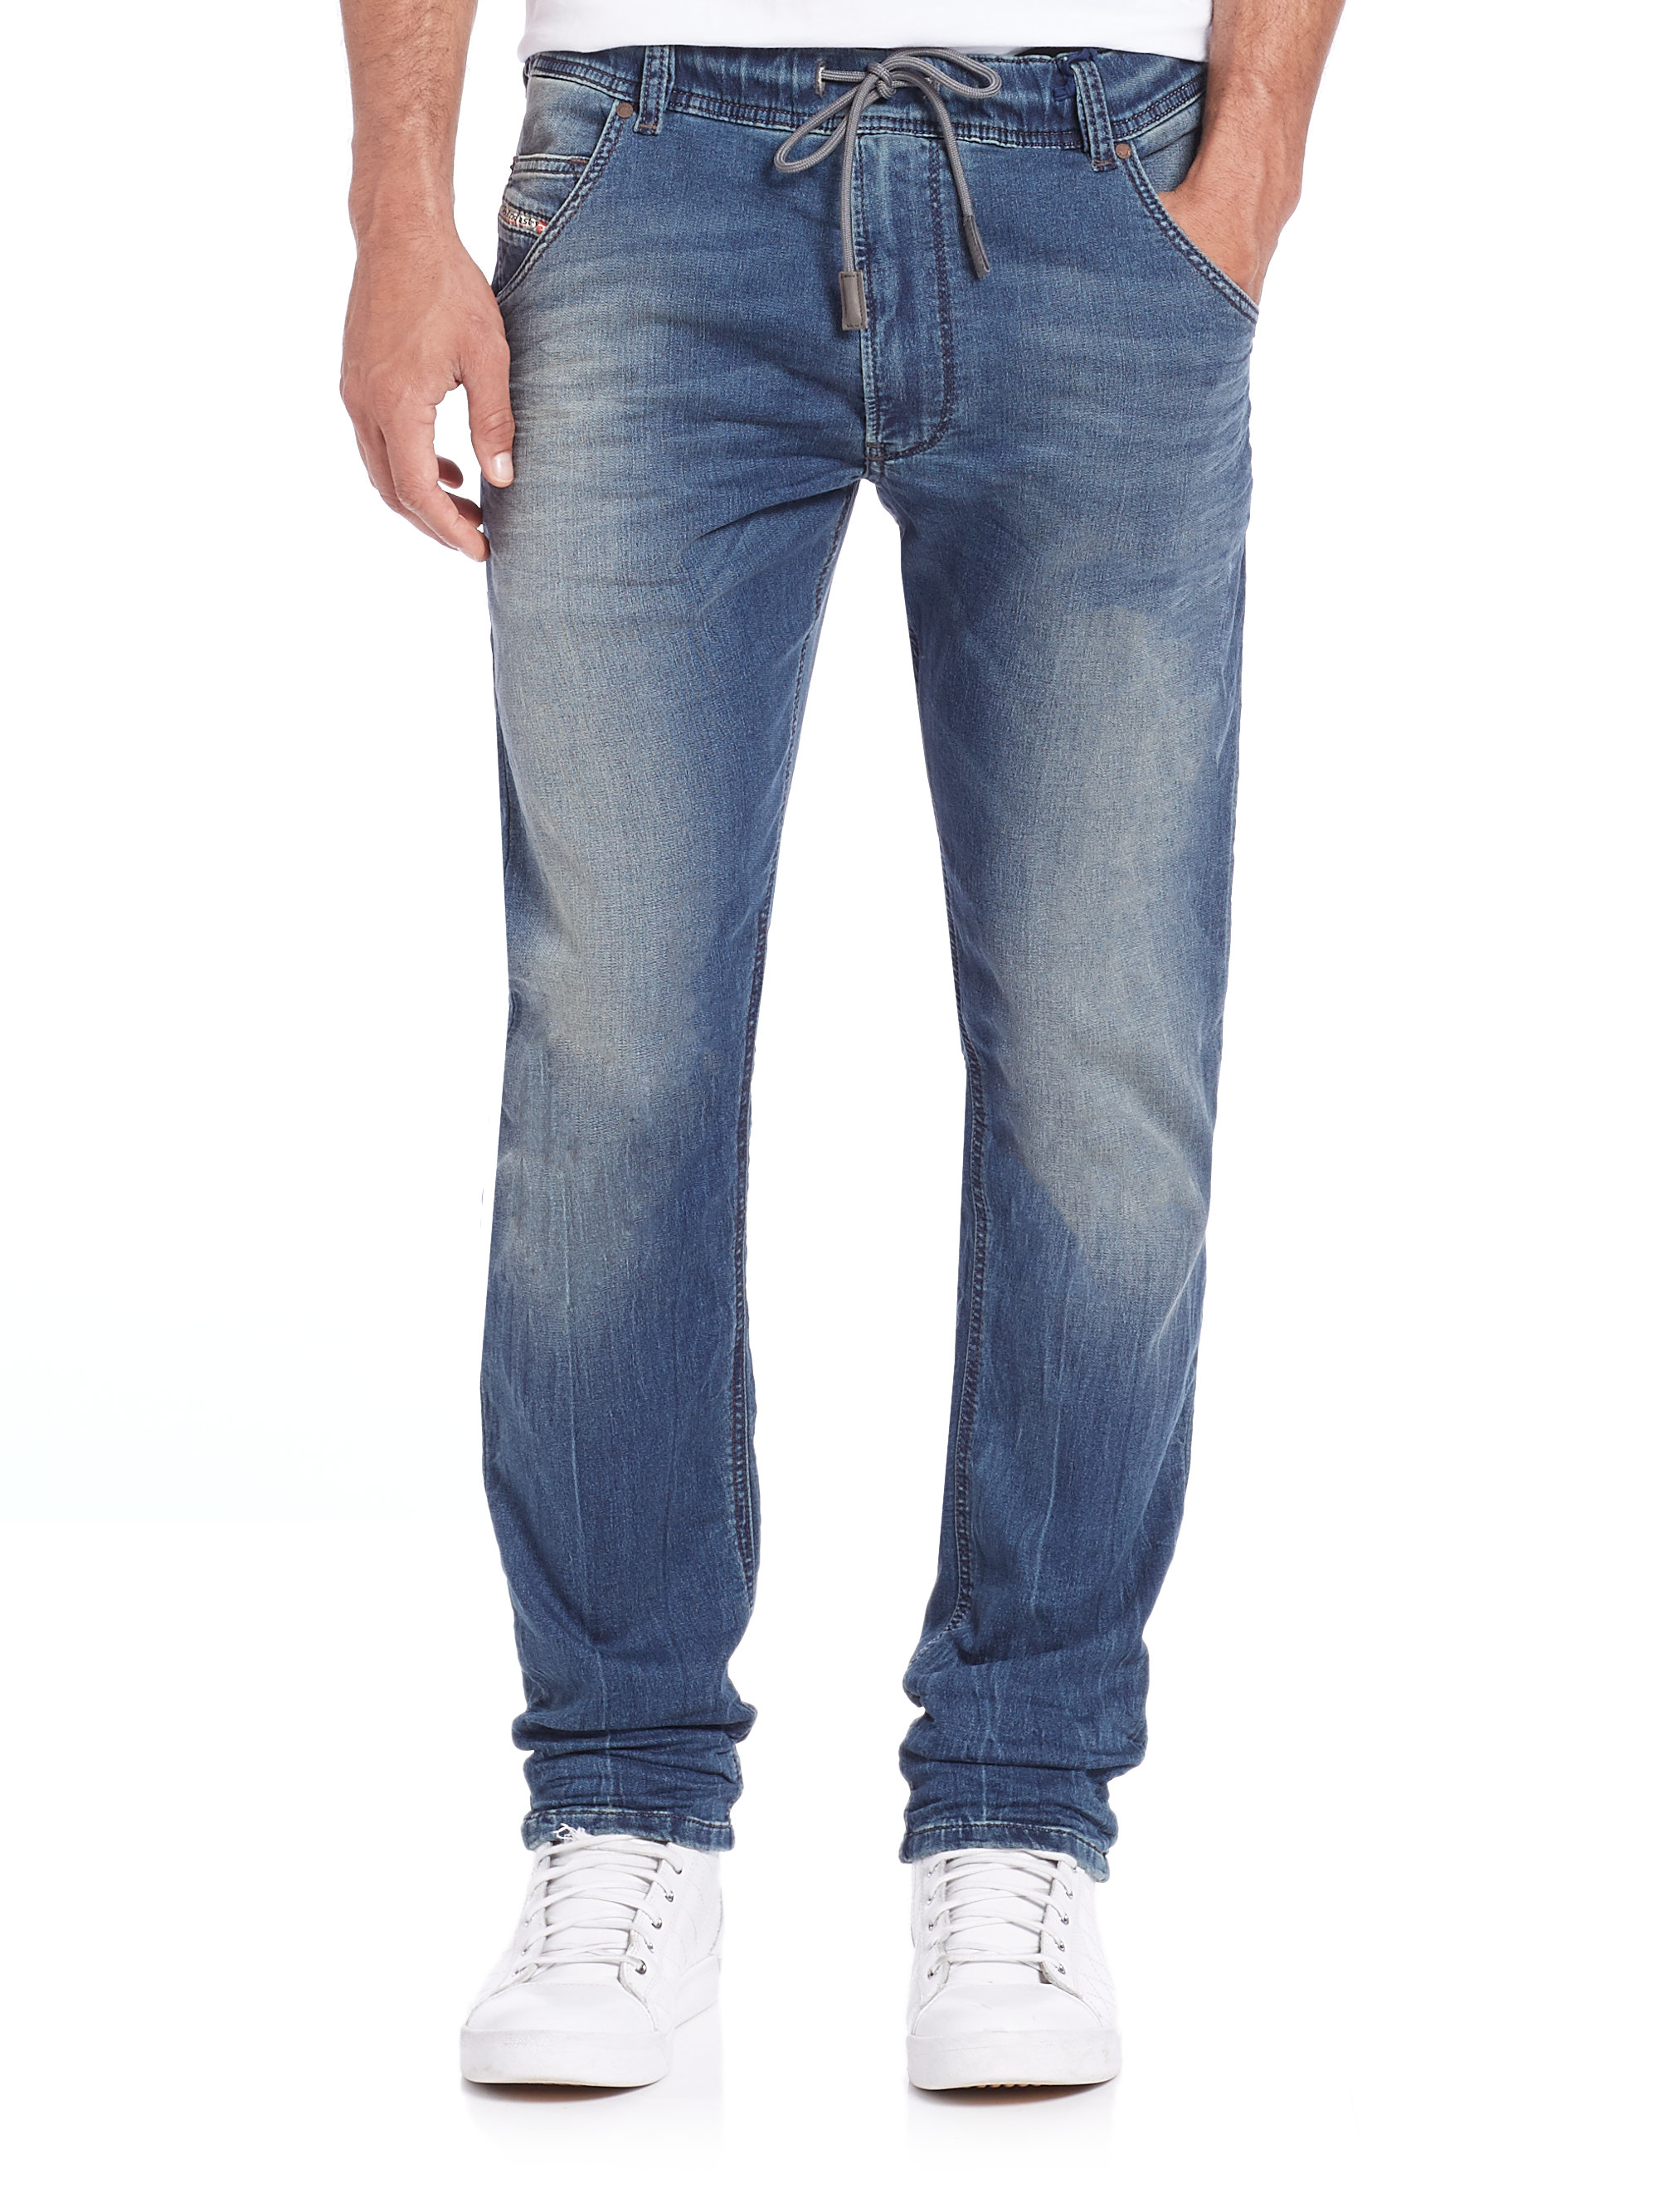 Lyst - Diesel Krooley Drawstring Jogger Jeans in Blue for Men